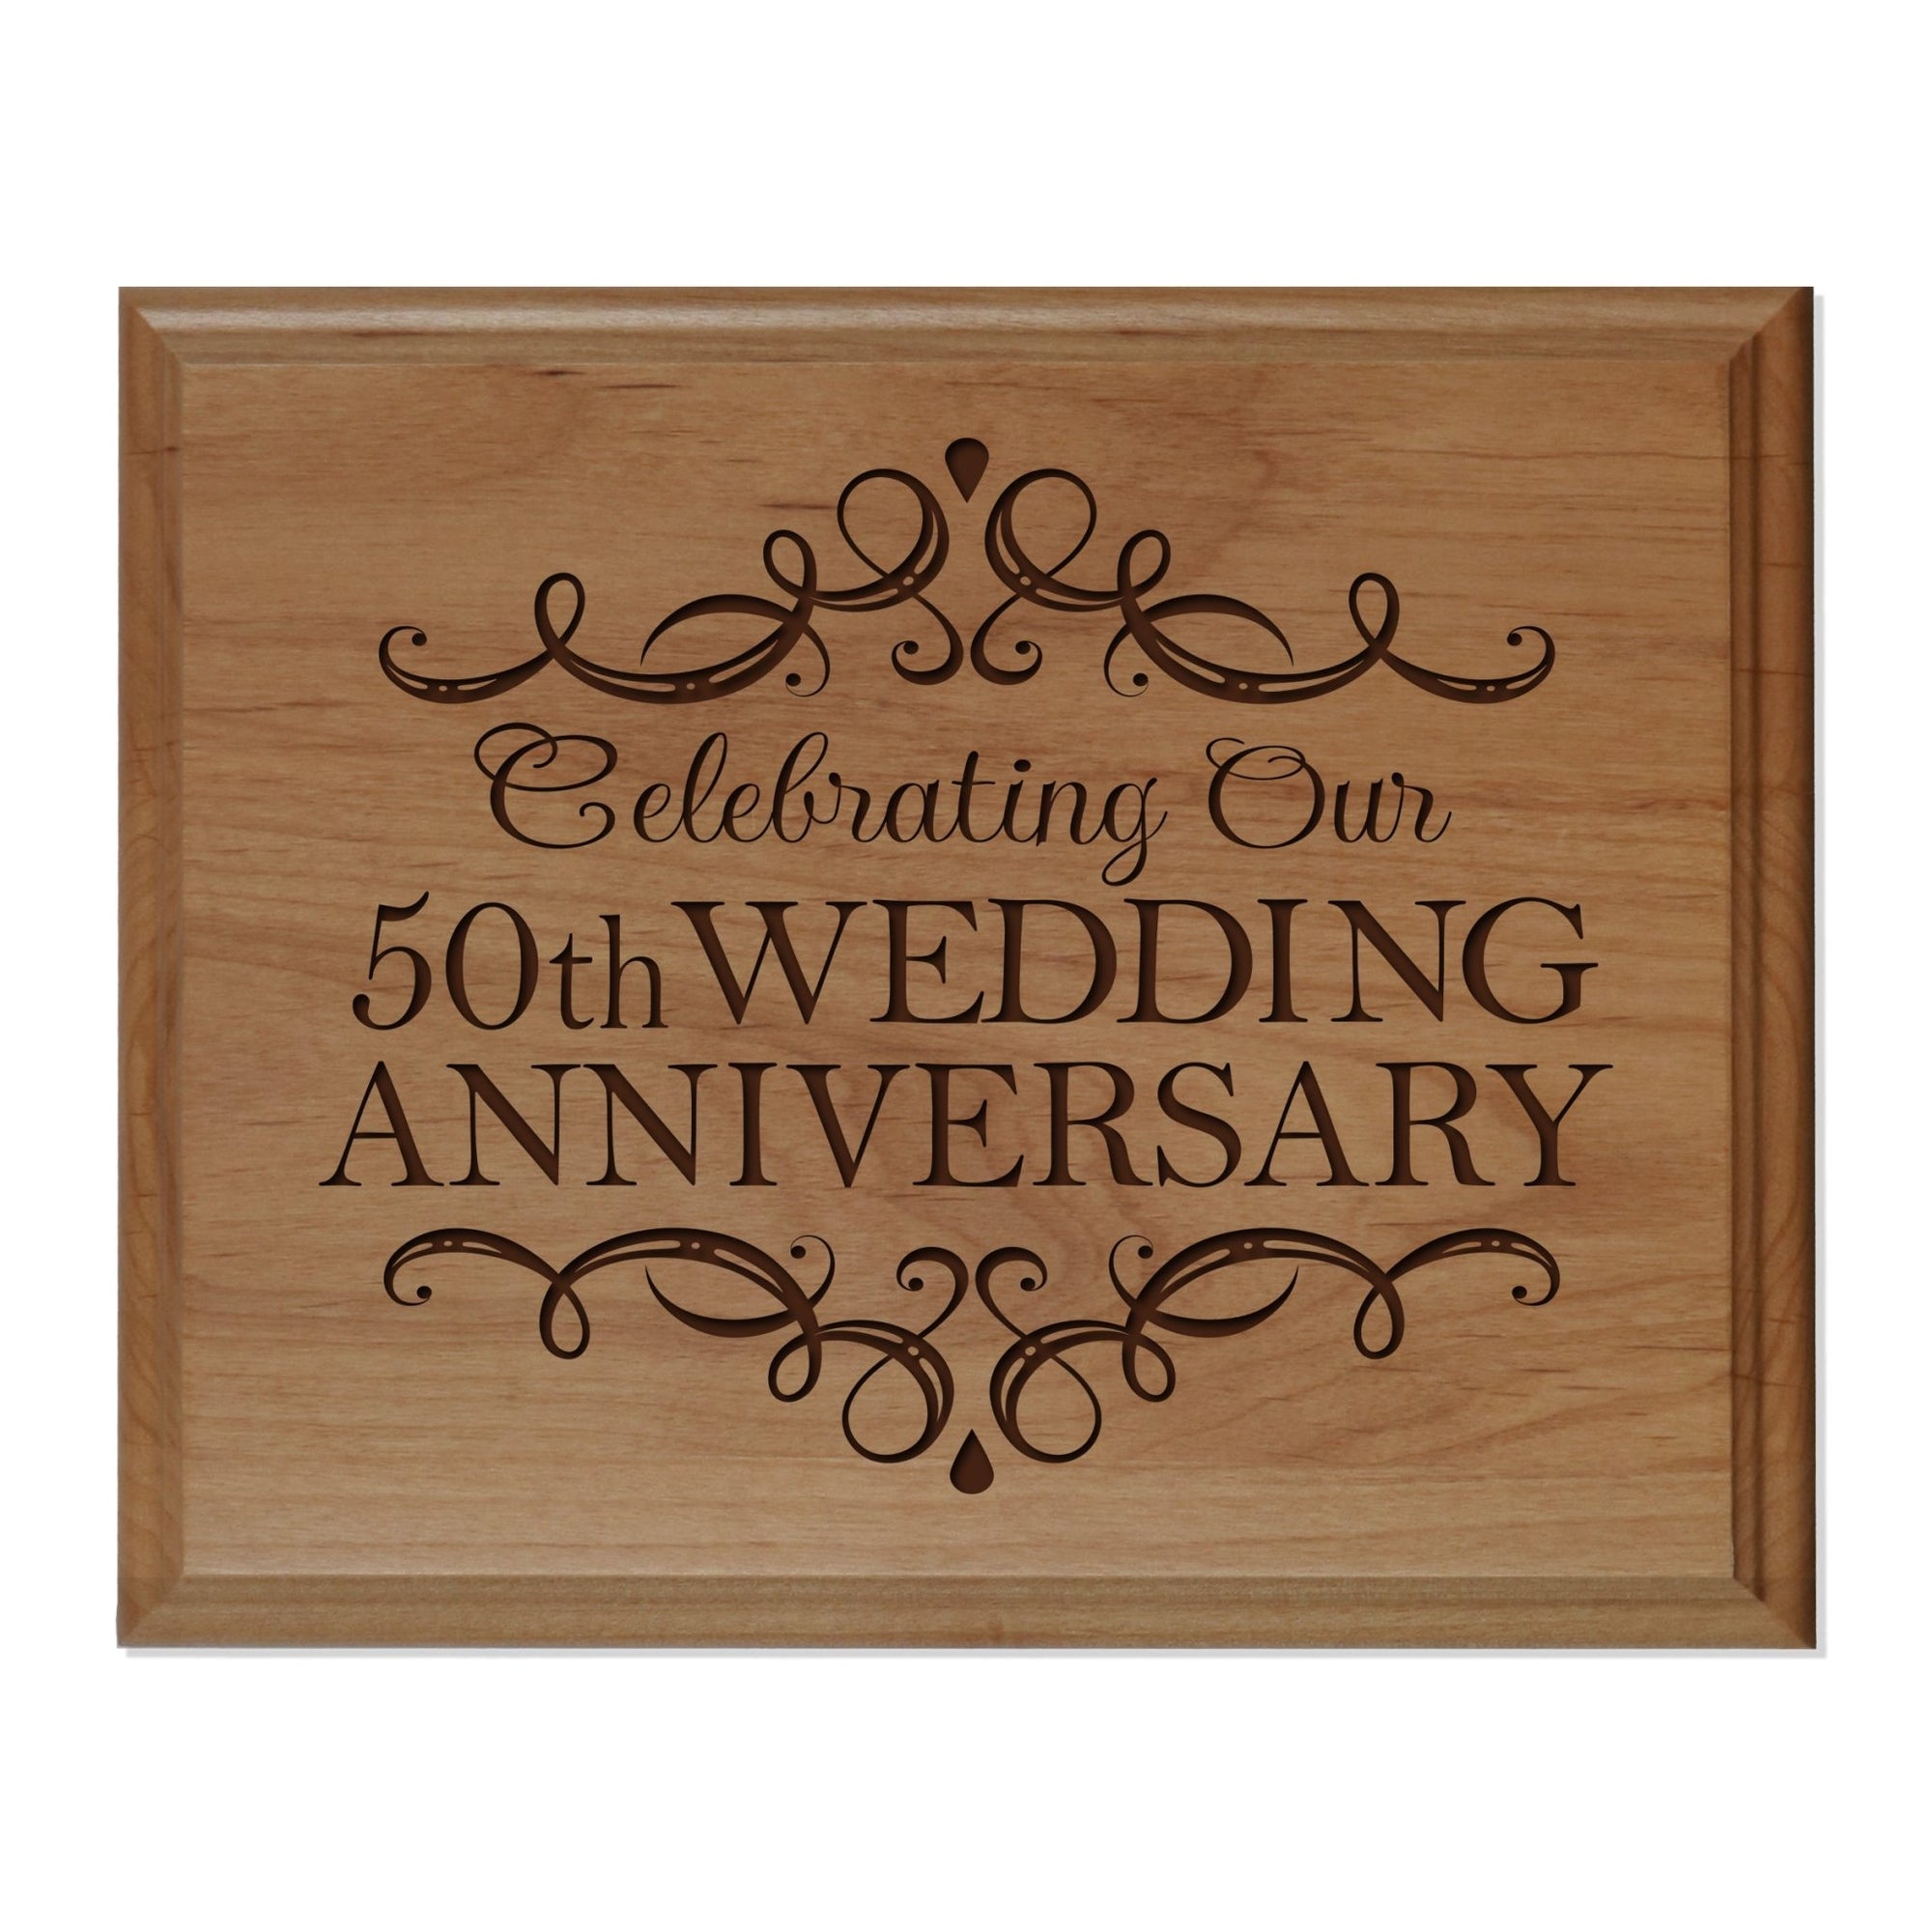 50th Wedding Anniversary Wall Plaque - Celebrating - LifeSong Milestones